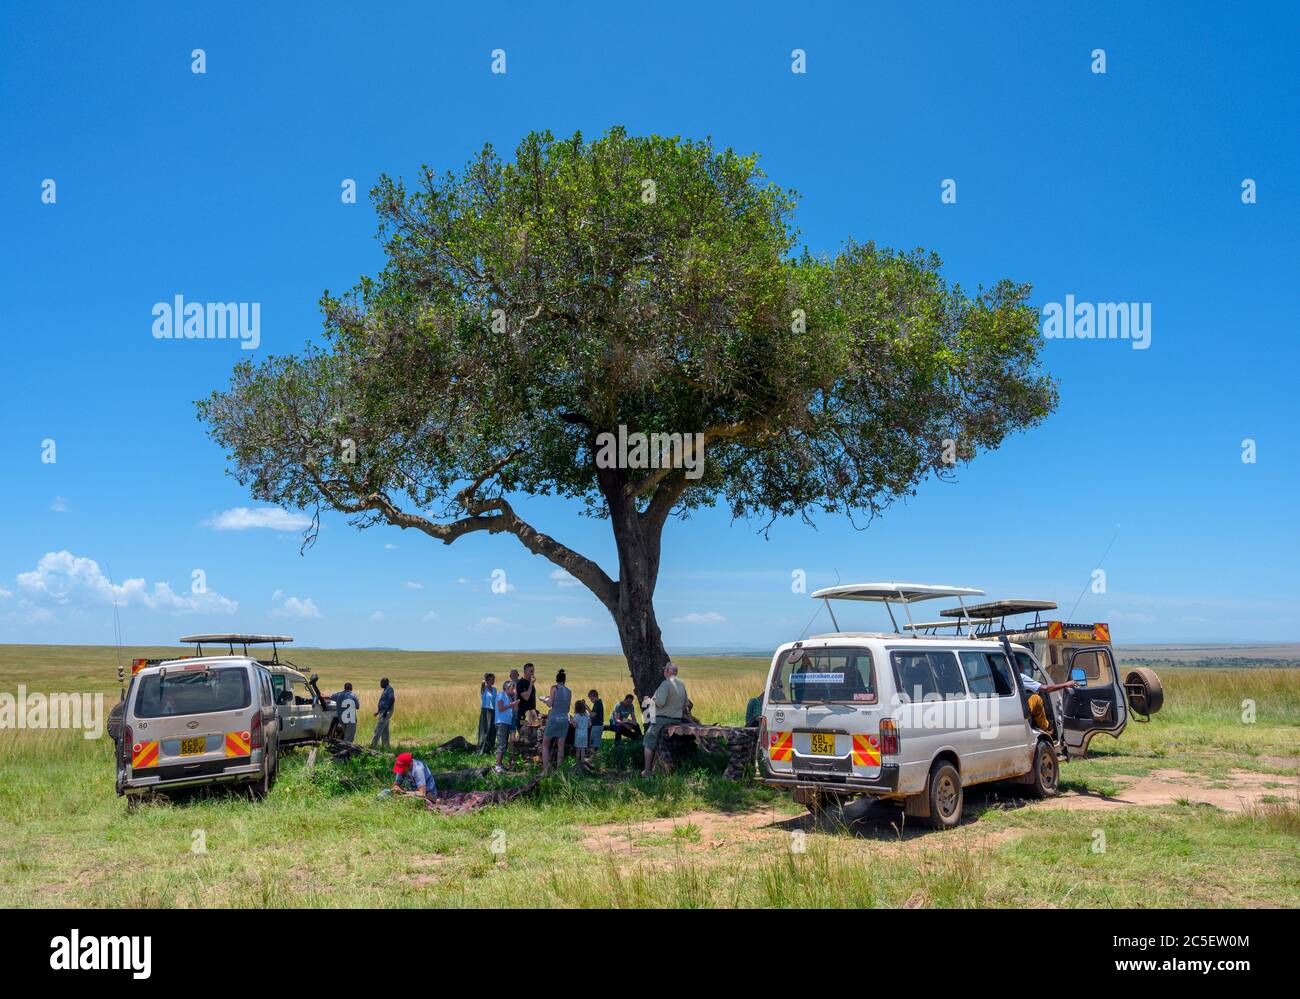 Safari véhicules et personnes ayant un pique-nique déjeuner sous un arbre, Mara Triangle, Masai Mara National Reserve, Kenya, Afrique Banque D'Images